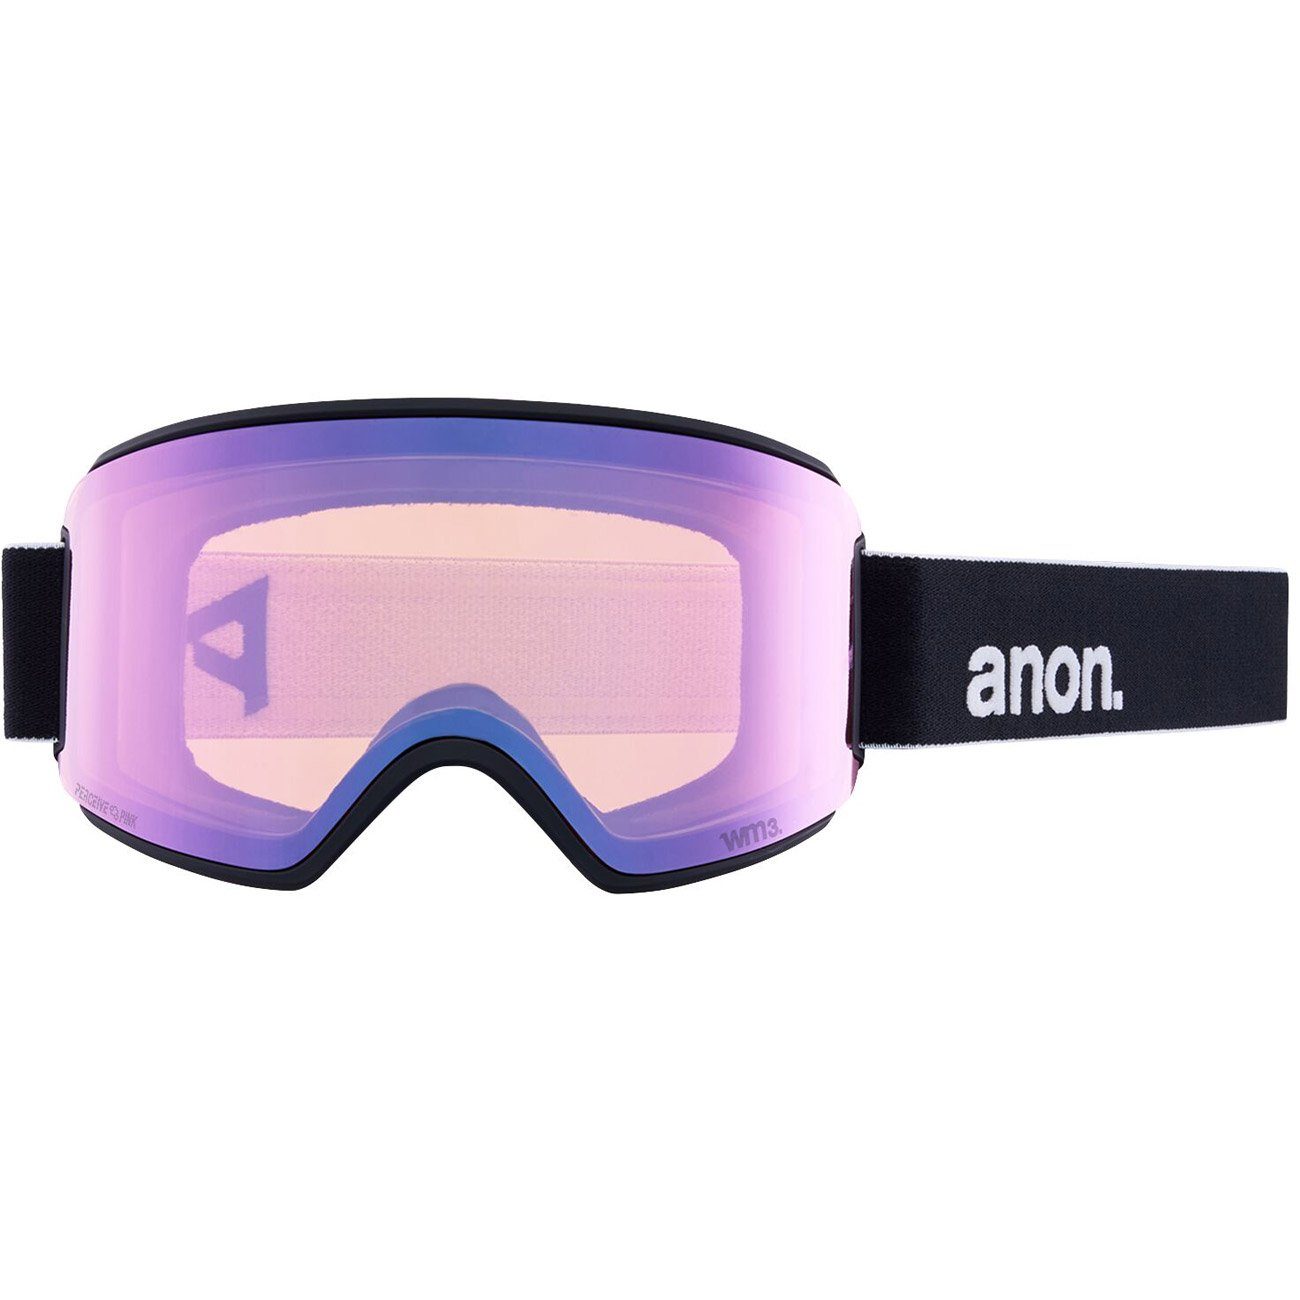 Snowboardbrille, WM3 Anon LINSE vrbl black/prcv blue MFI + BONUS